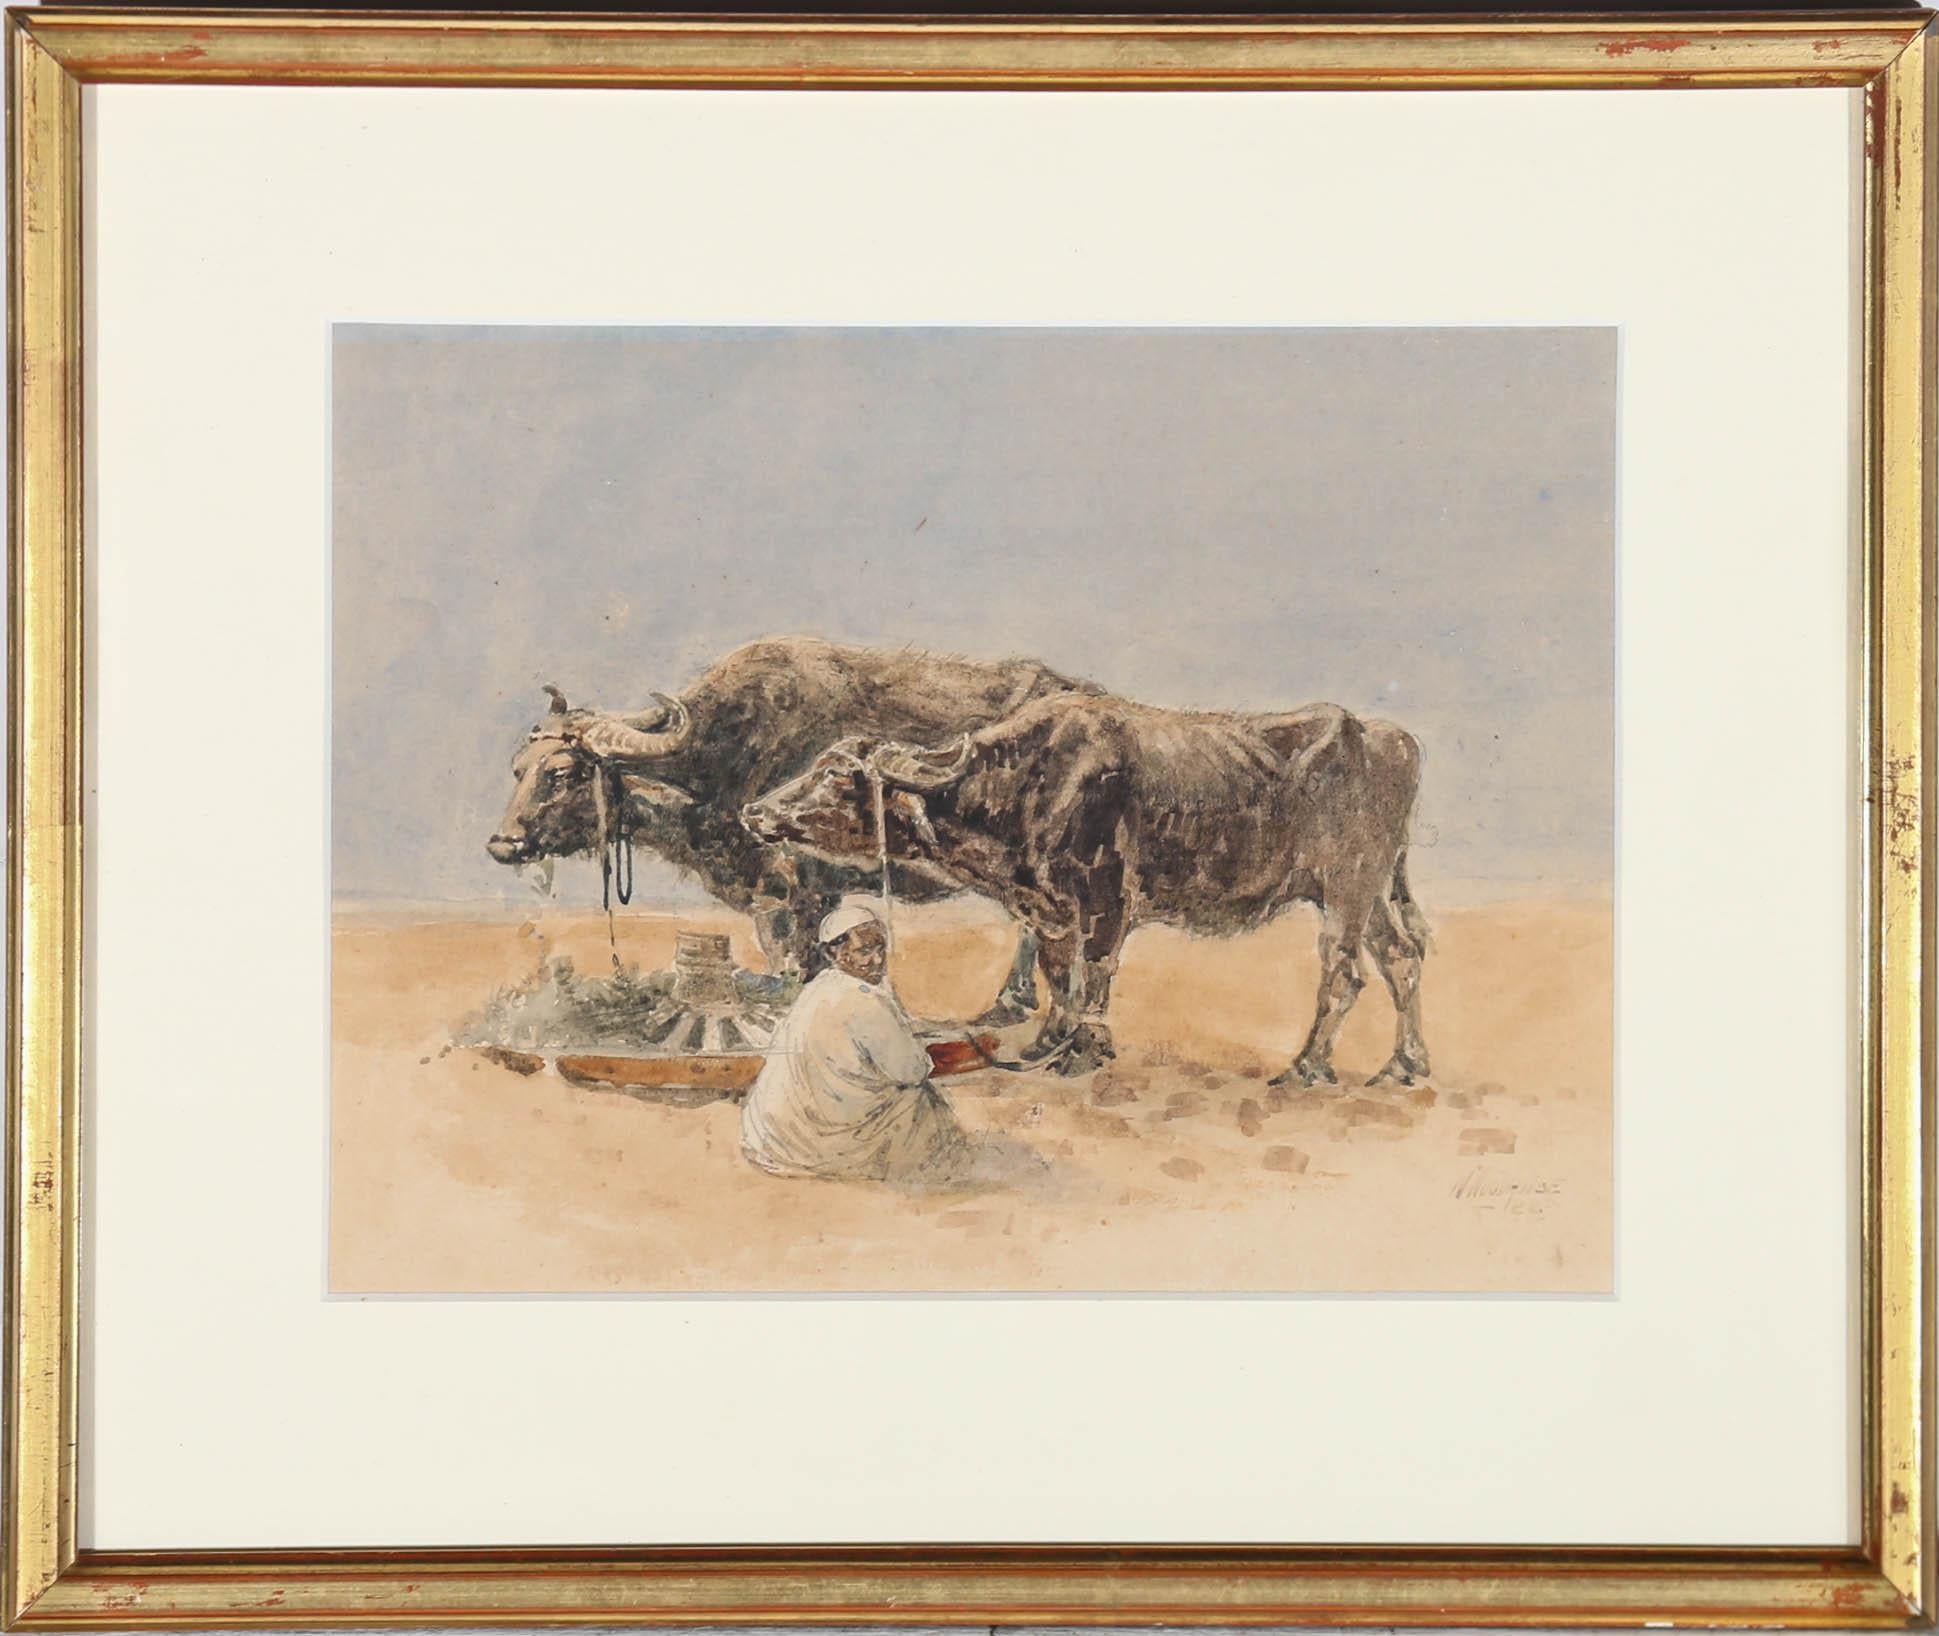 William Woodhouse (1857-1939) - Gerahmtes Aquarell, Oxen in der Wüste, 1889